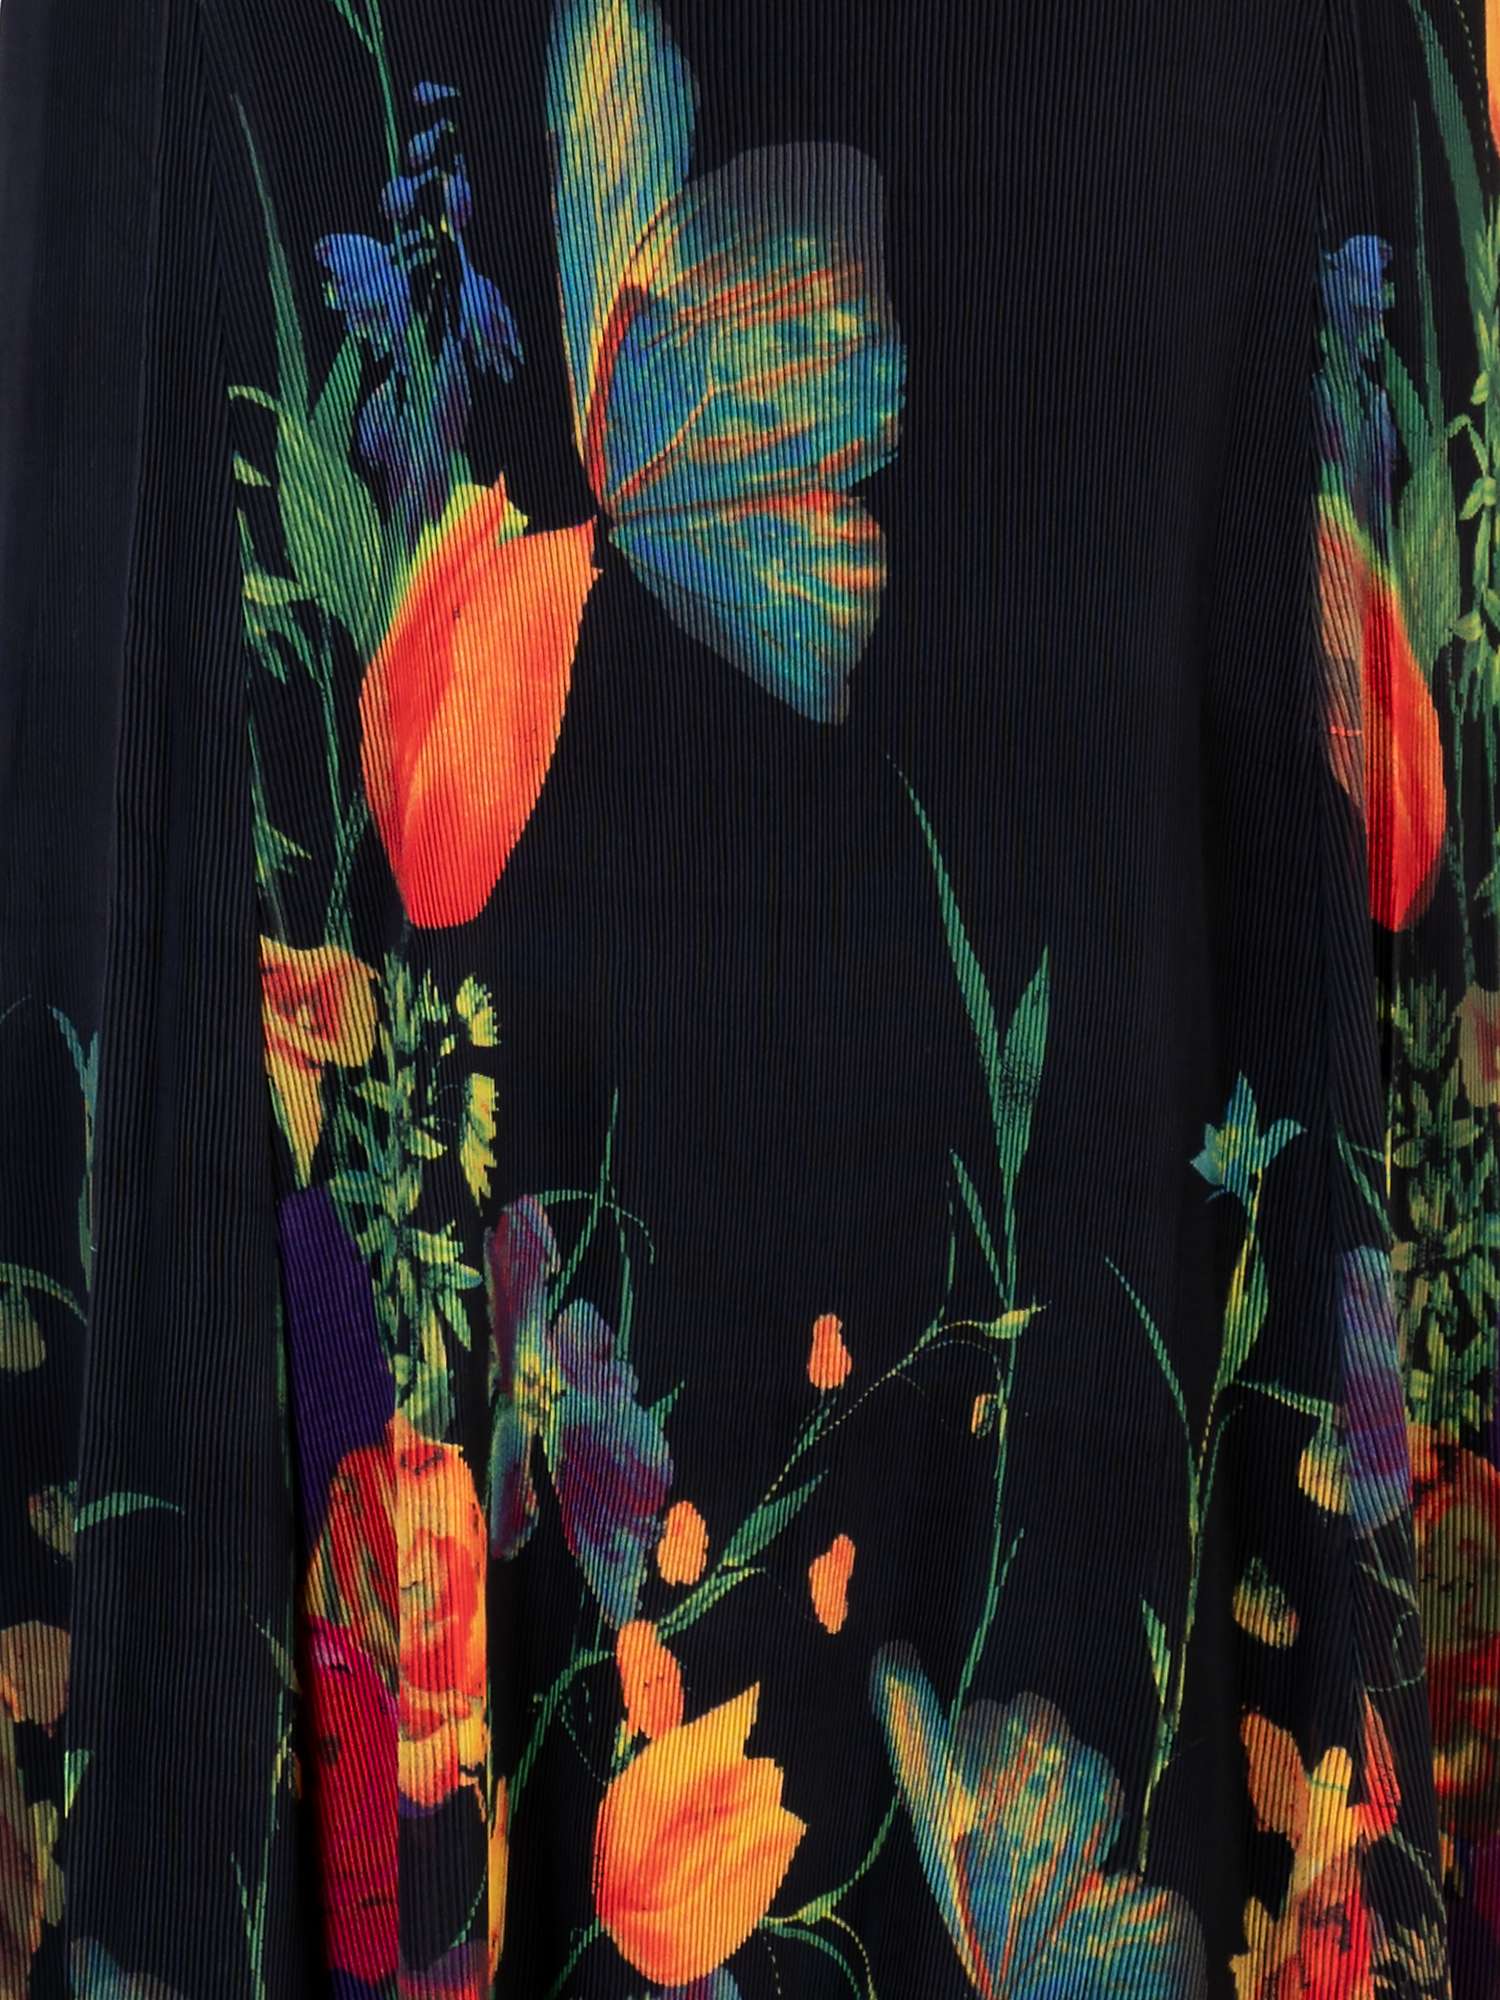 Buy chesca Tiffany Pleated Midi Dress, Black/Multi Online at johnlewis.com